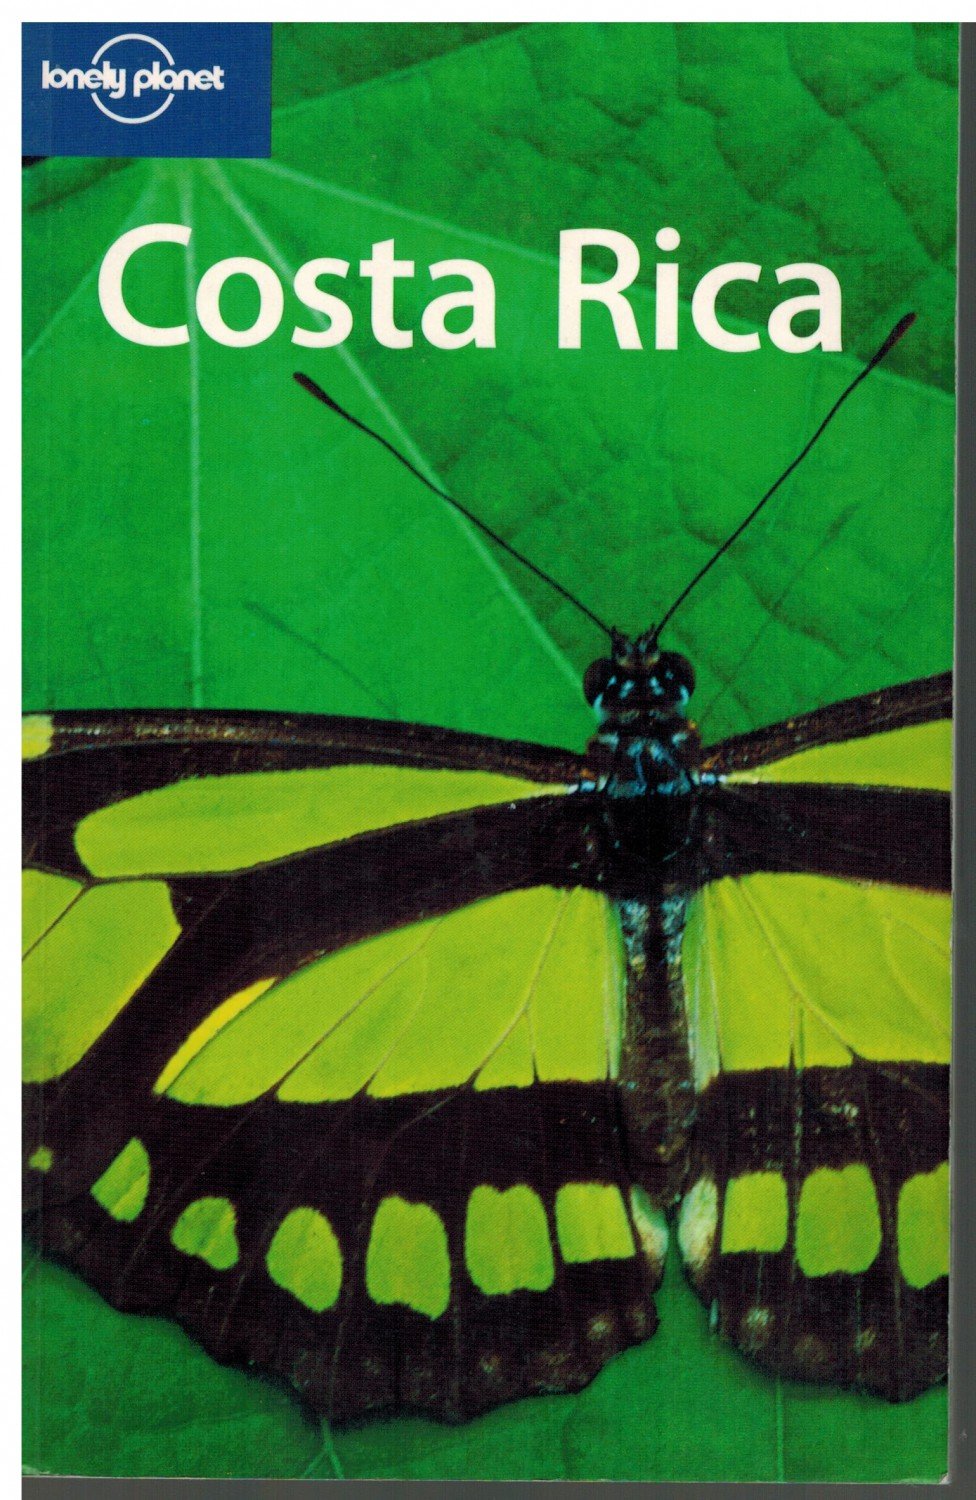 Penland By Carolina Miranda Paige R Lonely Planet Costa Rica 